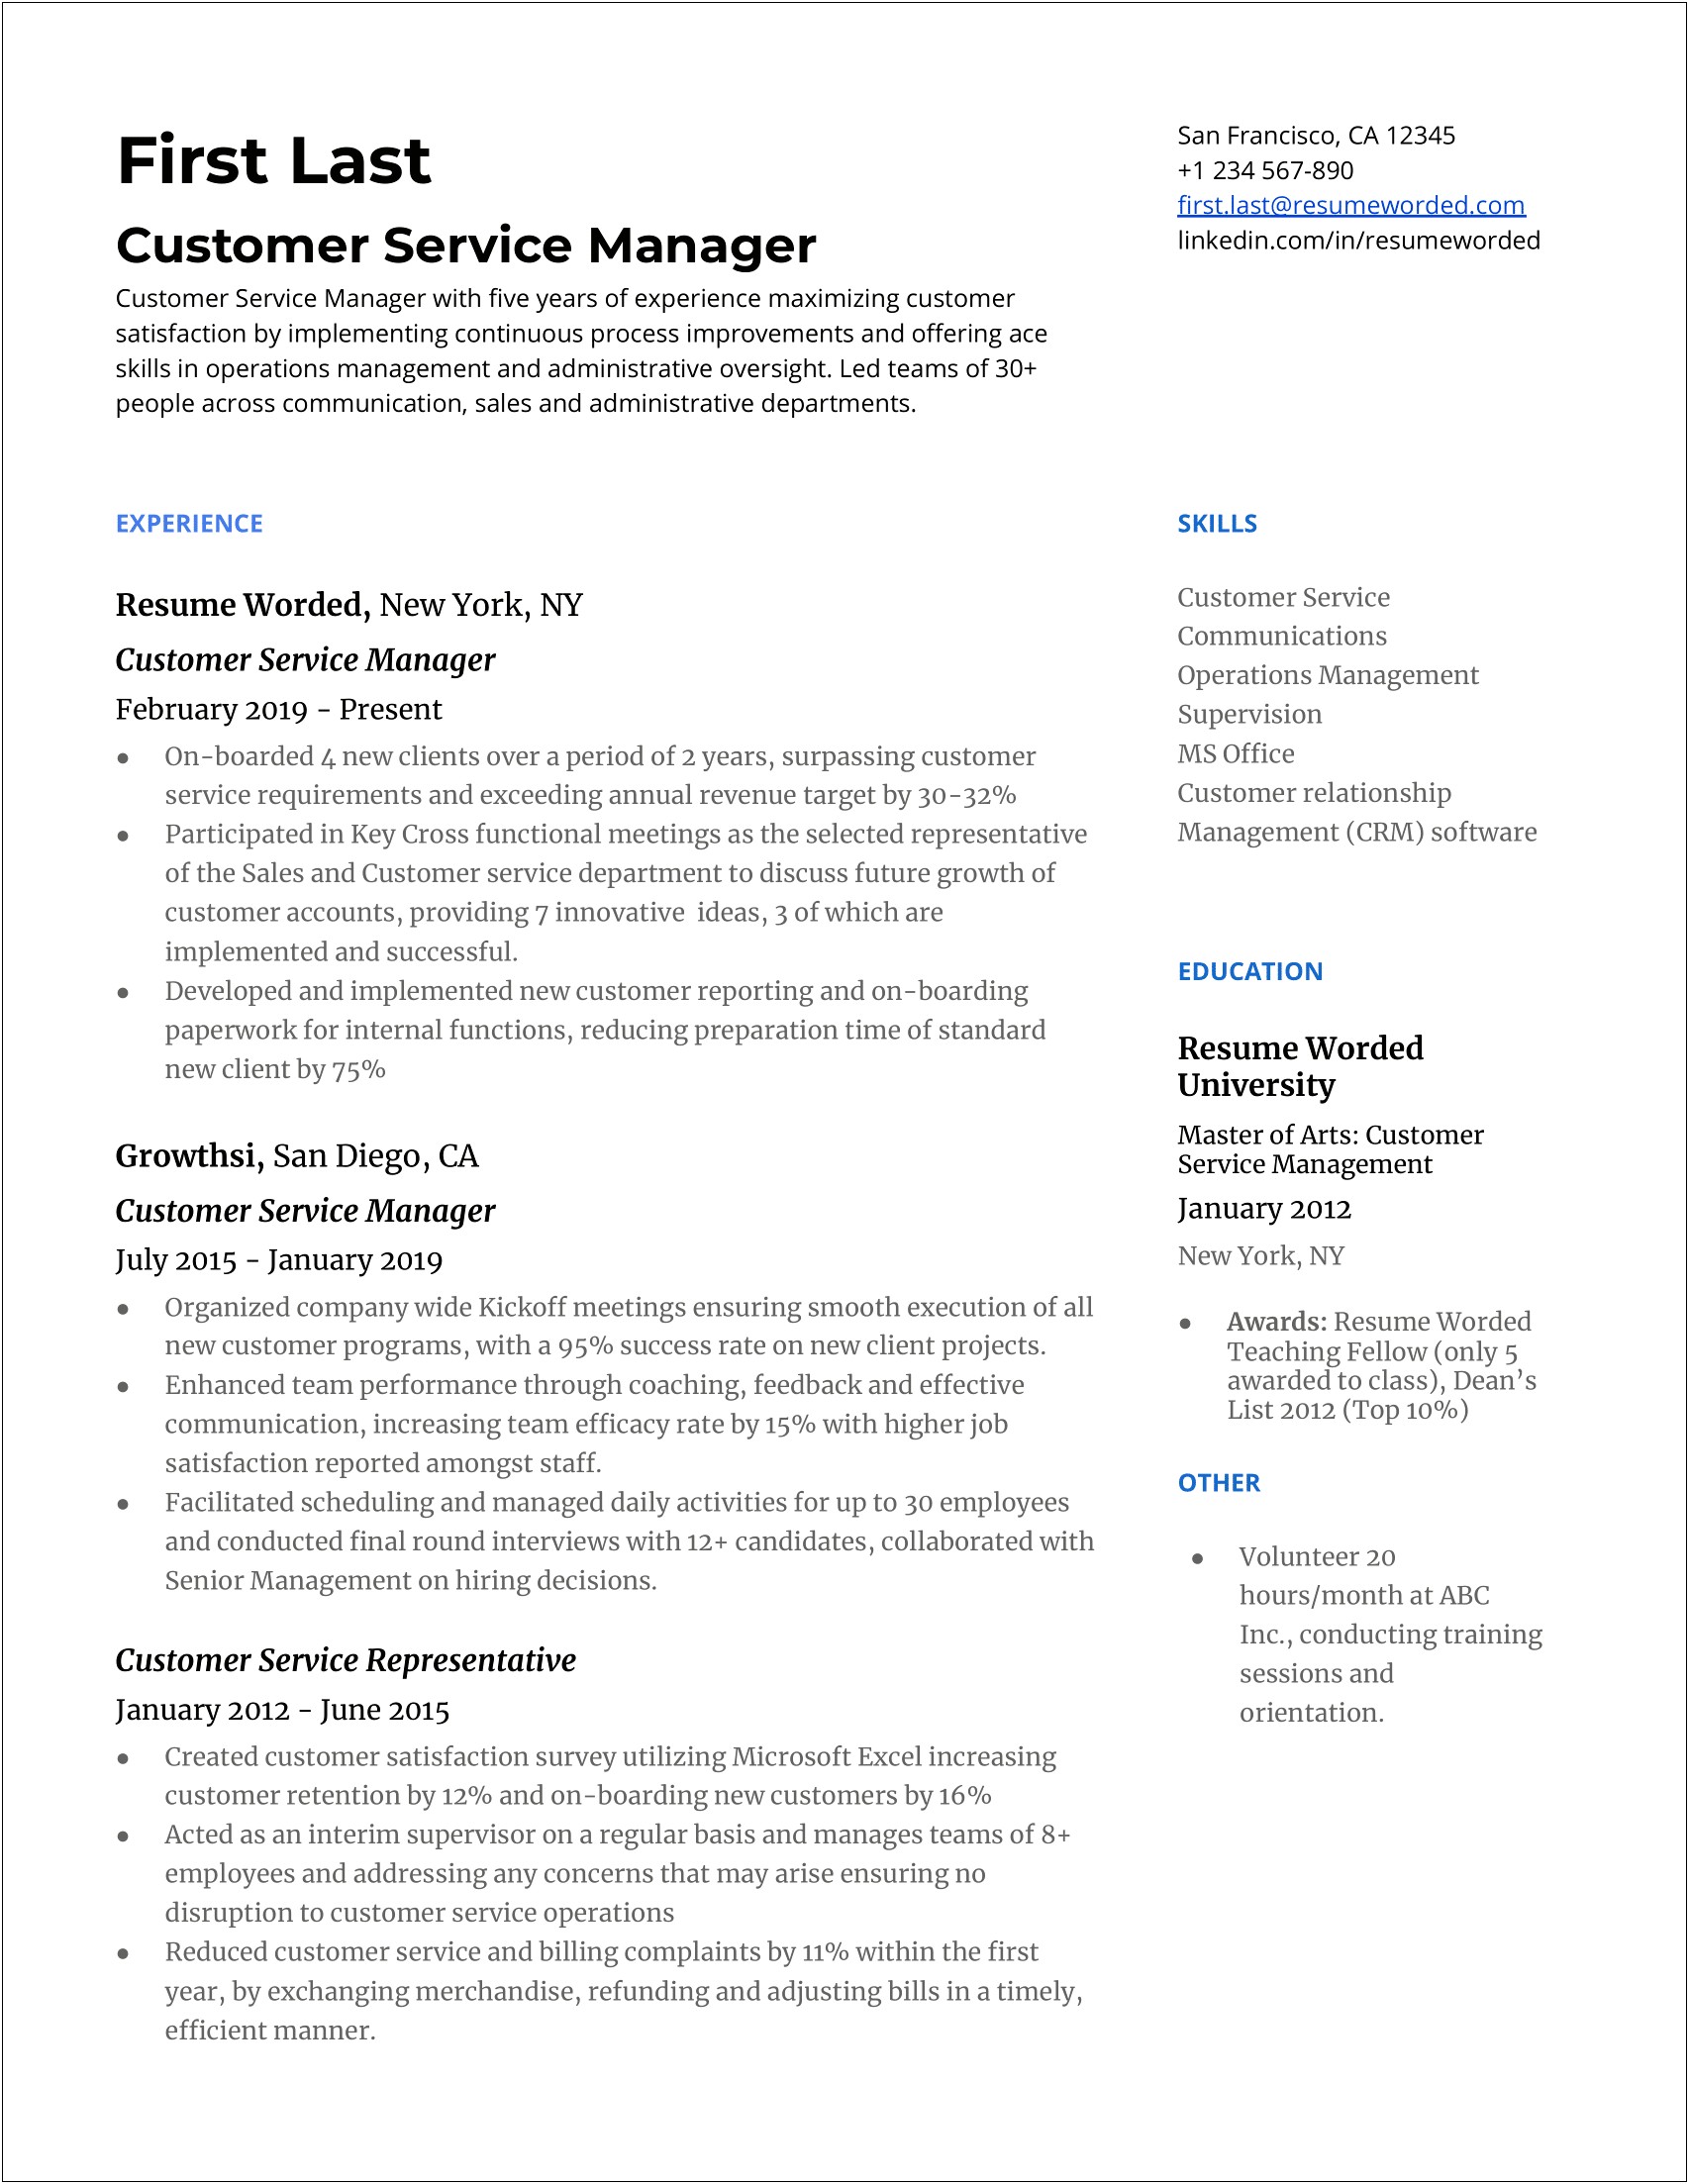 Customer Success Manager Resume Profile